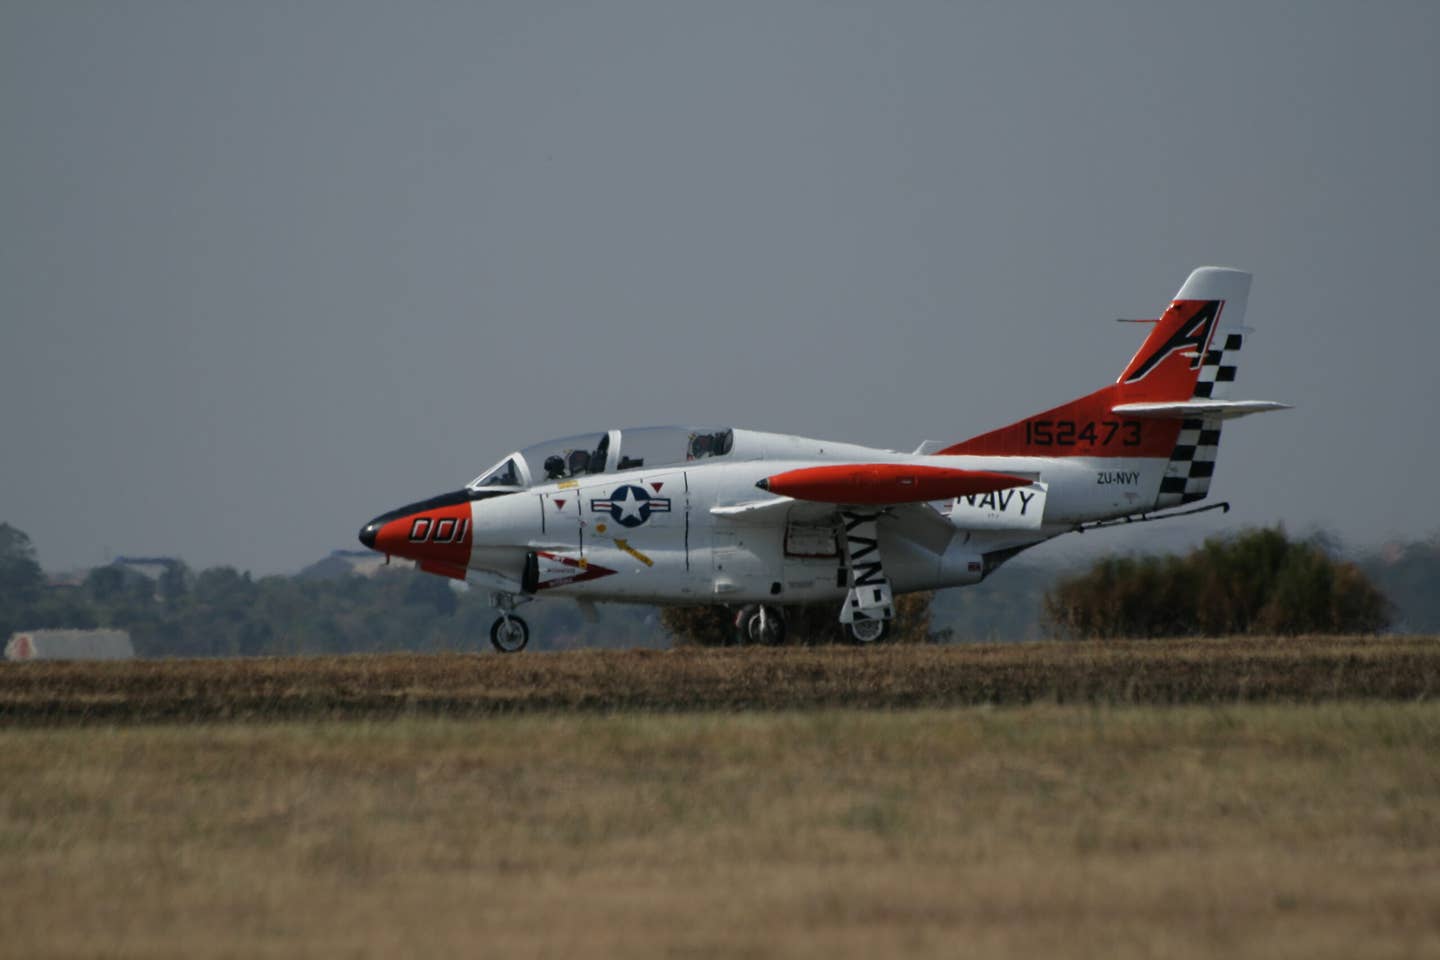 T-2B Buckeye ZU-NVY, at the Swartkop Airshow in South Africa in 2012. <em>NJR ZA/Wikimedia Commons</em>